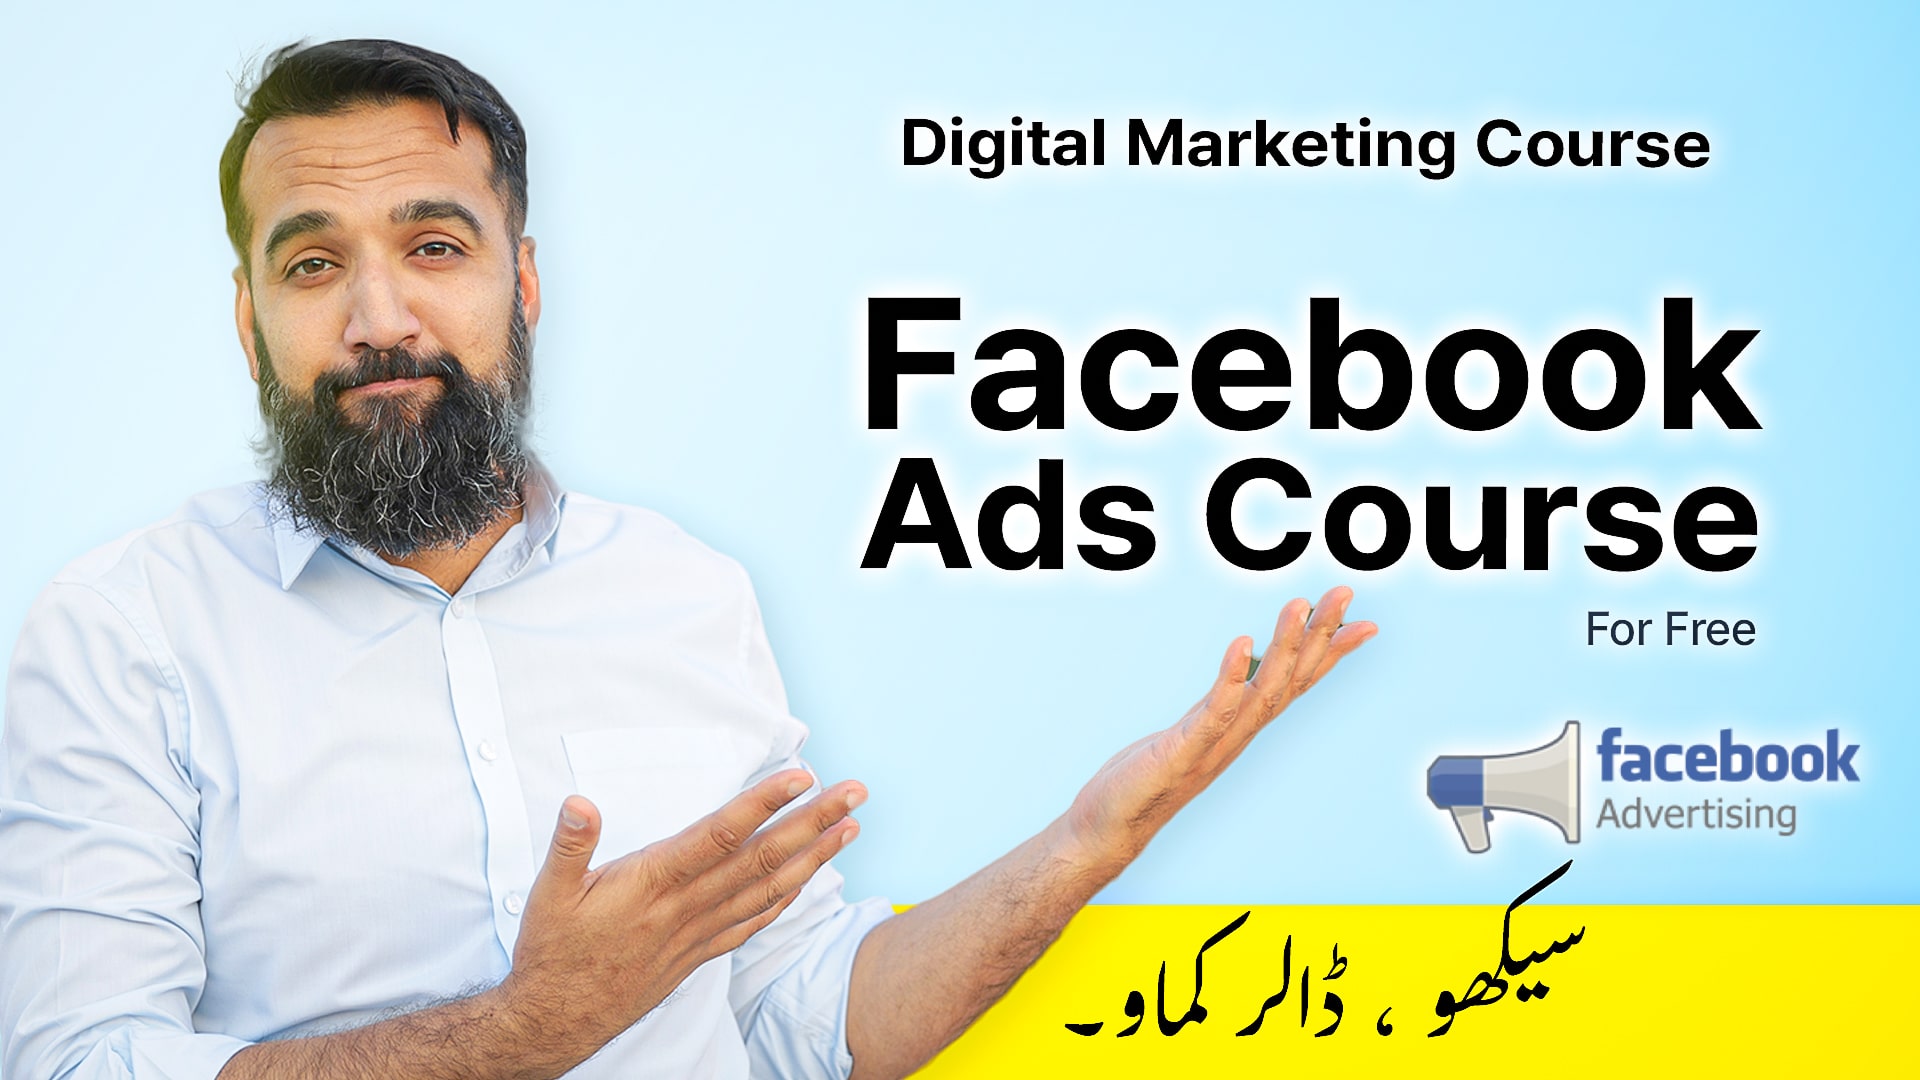  facebook-ads-course-for-beginners-digital-marketers-by-azadchaiwala-64f8562da8d4a259742793.jpg 